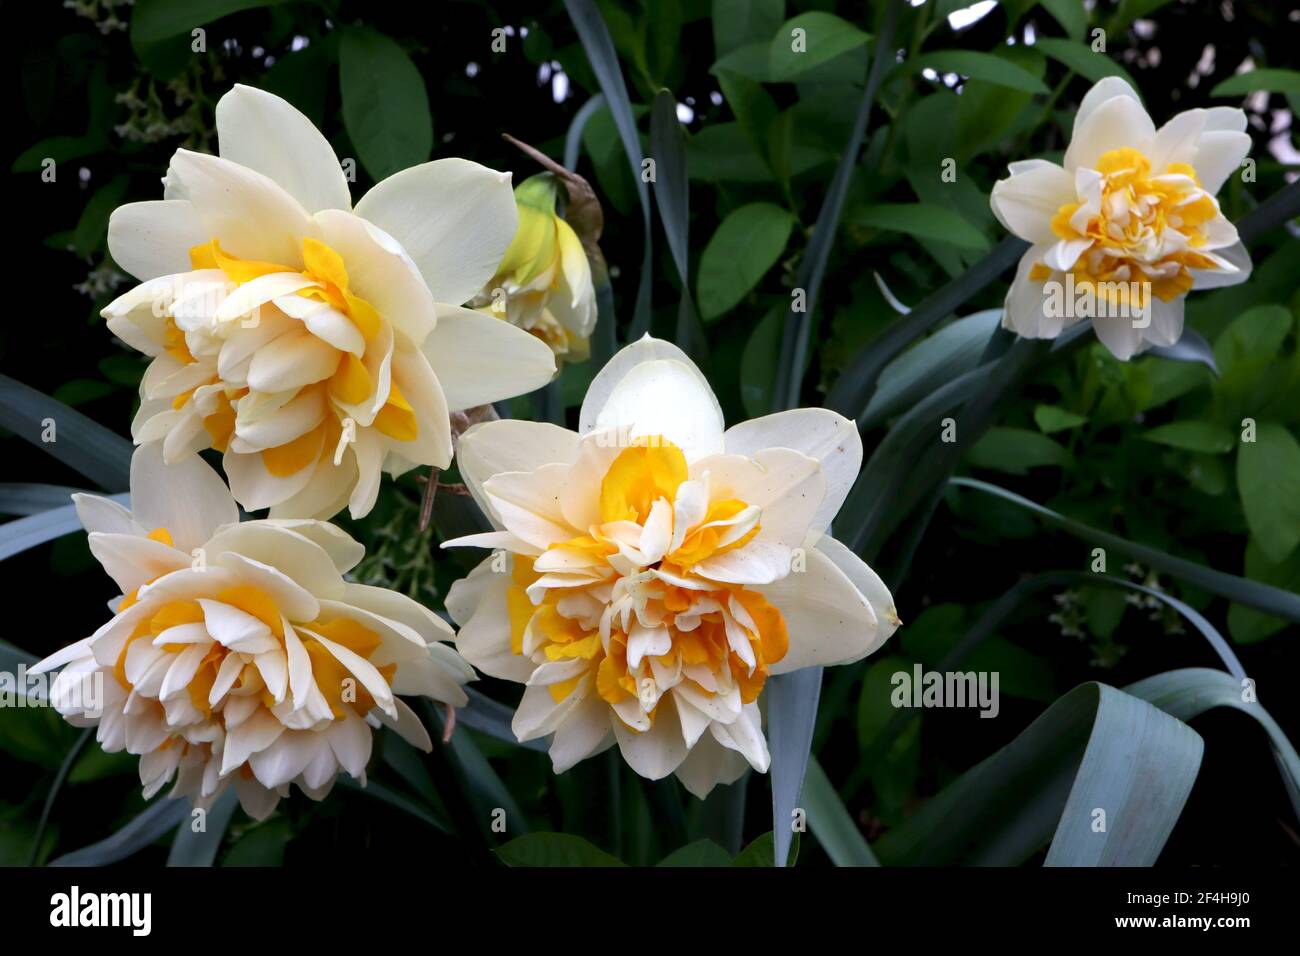 Narcissus ‘Double Star’ Division 4 Double daffodils Double Star daffodil – pétales blancs avec pétaloïdes jaunes et blancs, mars, Angleterre, Royaume-Uni Banque D'Images